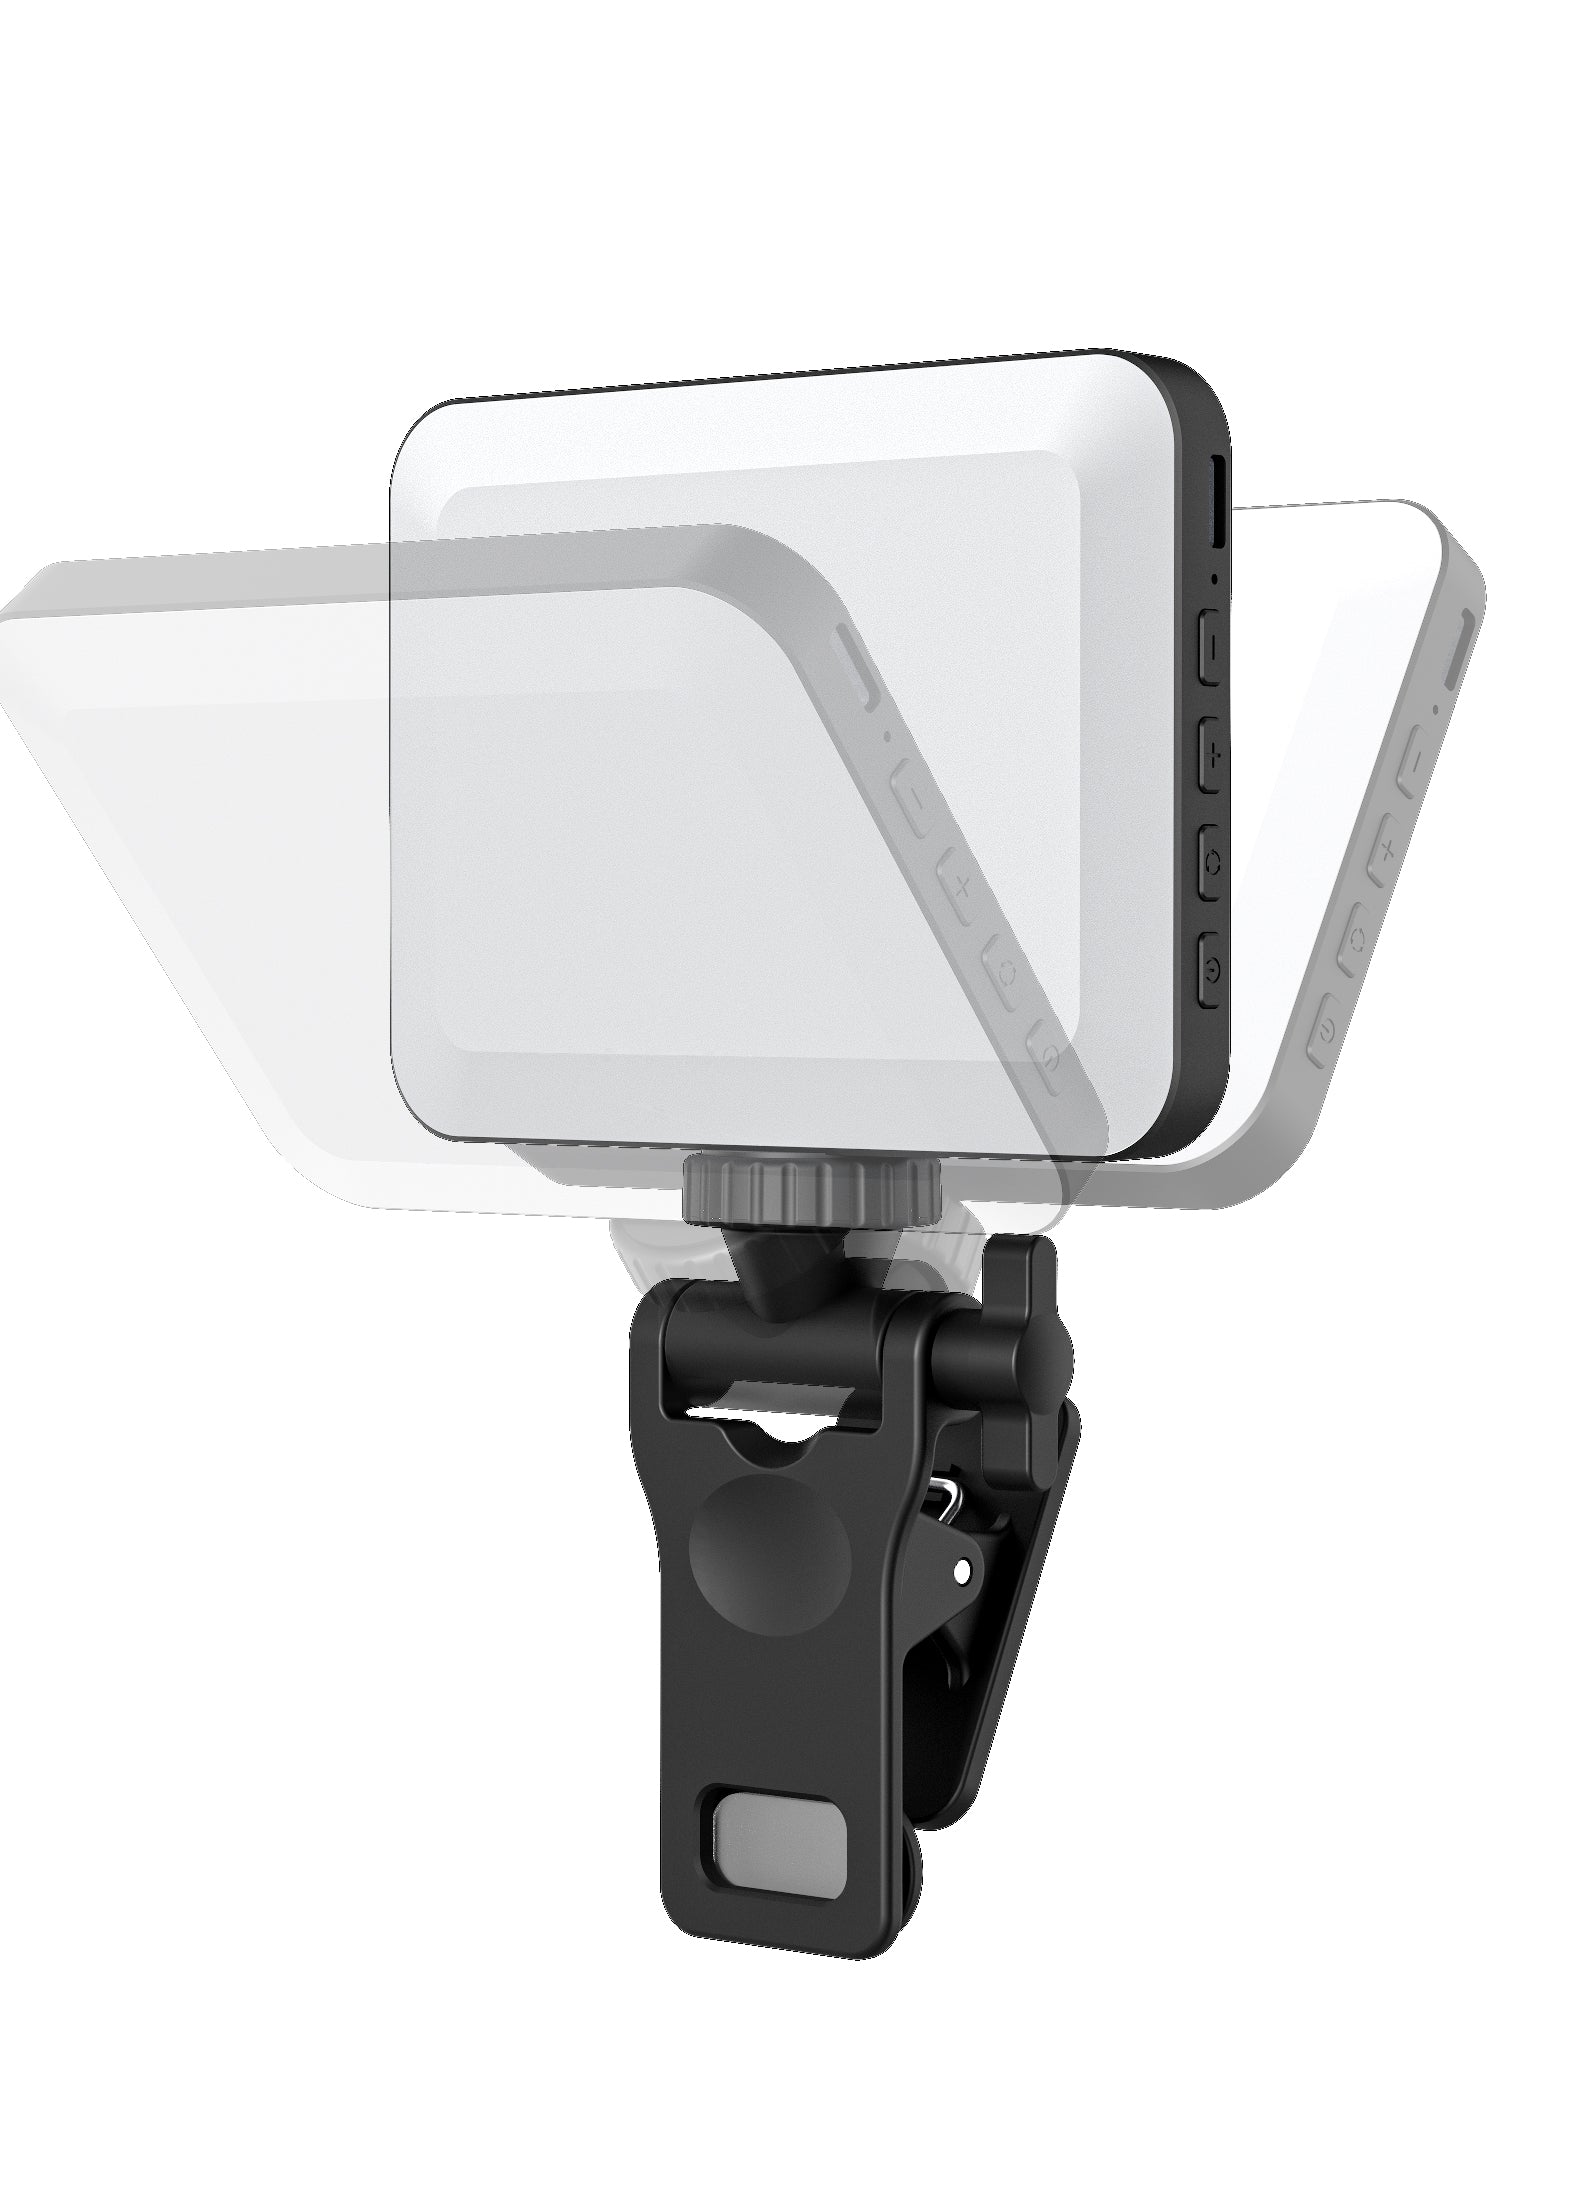 Rechargeable Soft Selfie CRI95+/3  Light ,2000mAh Portable LED Light for Pictures